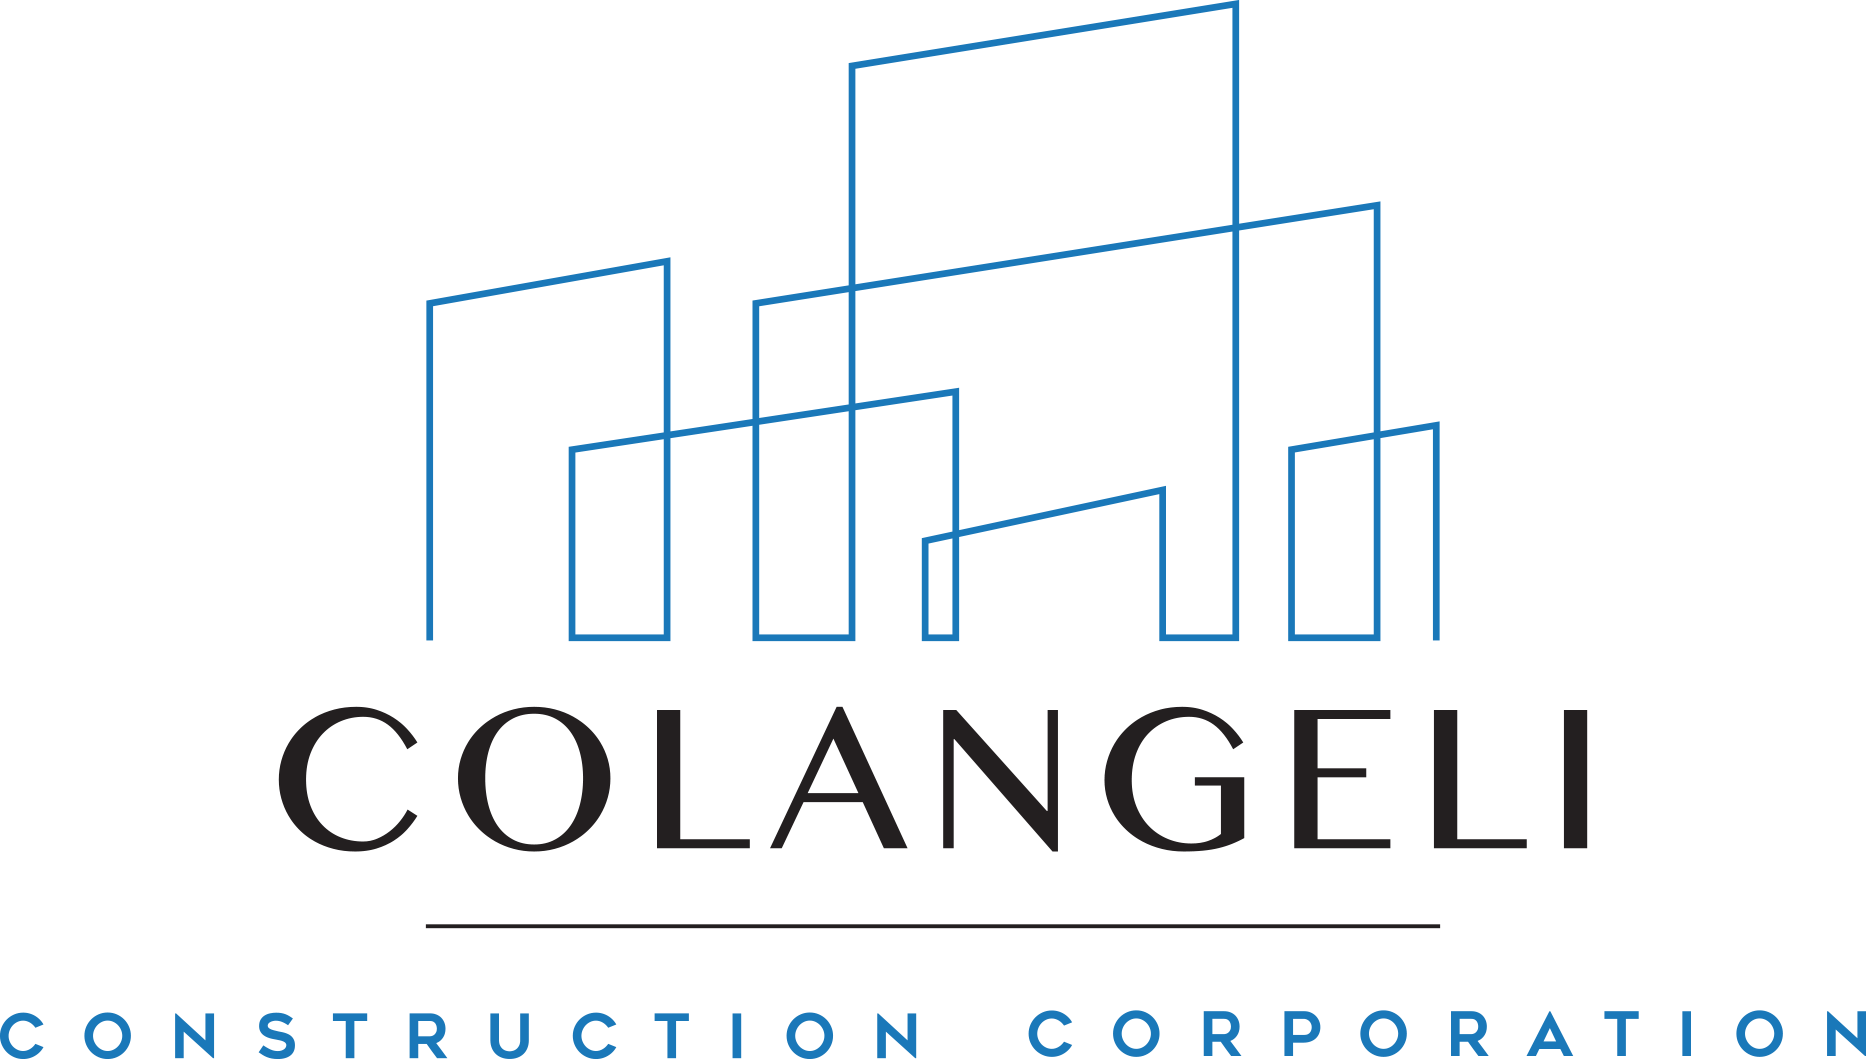 Colangeli Construction Corporation